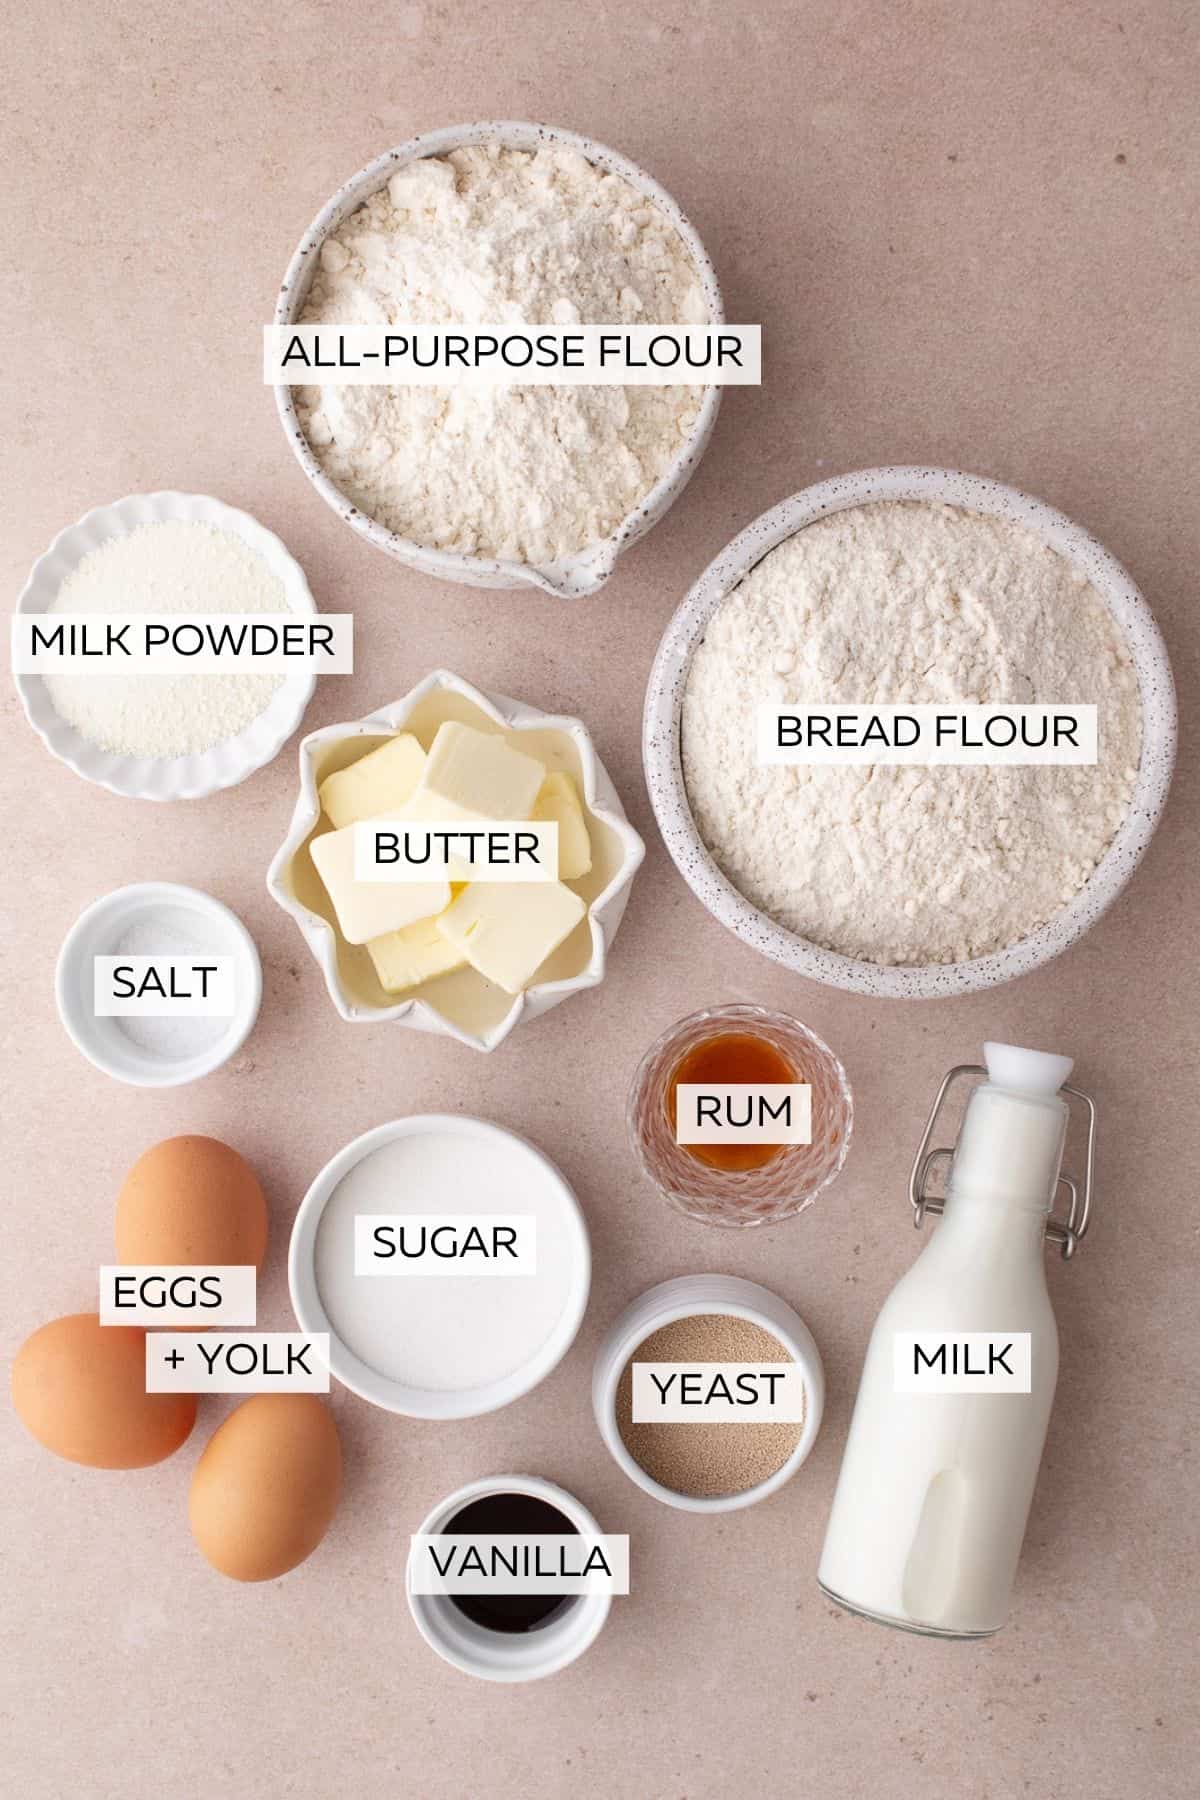 Ingredients for rose brioche dough.